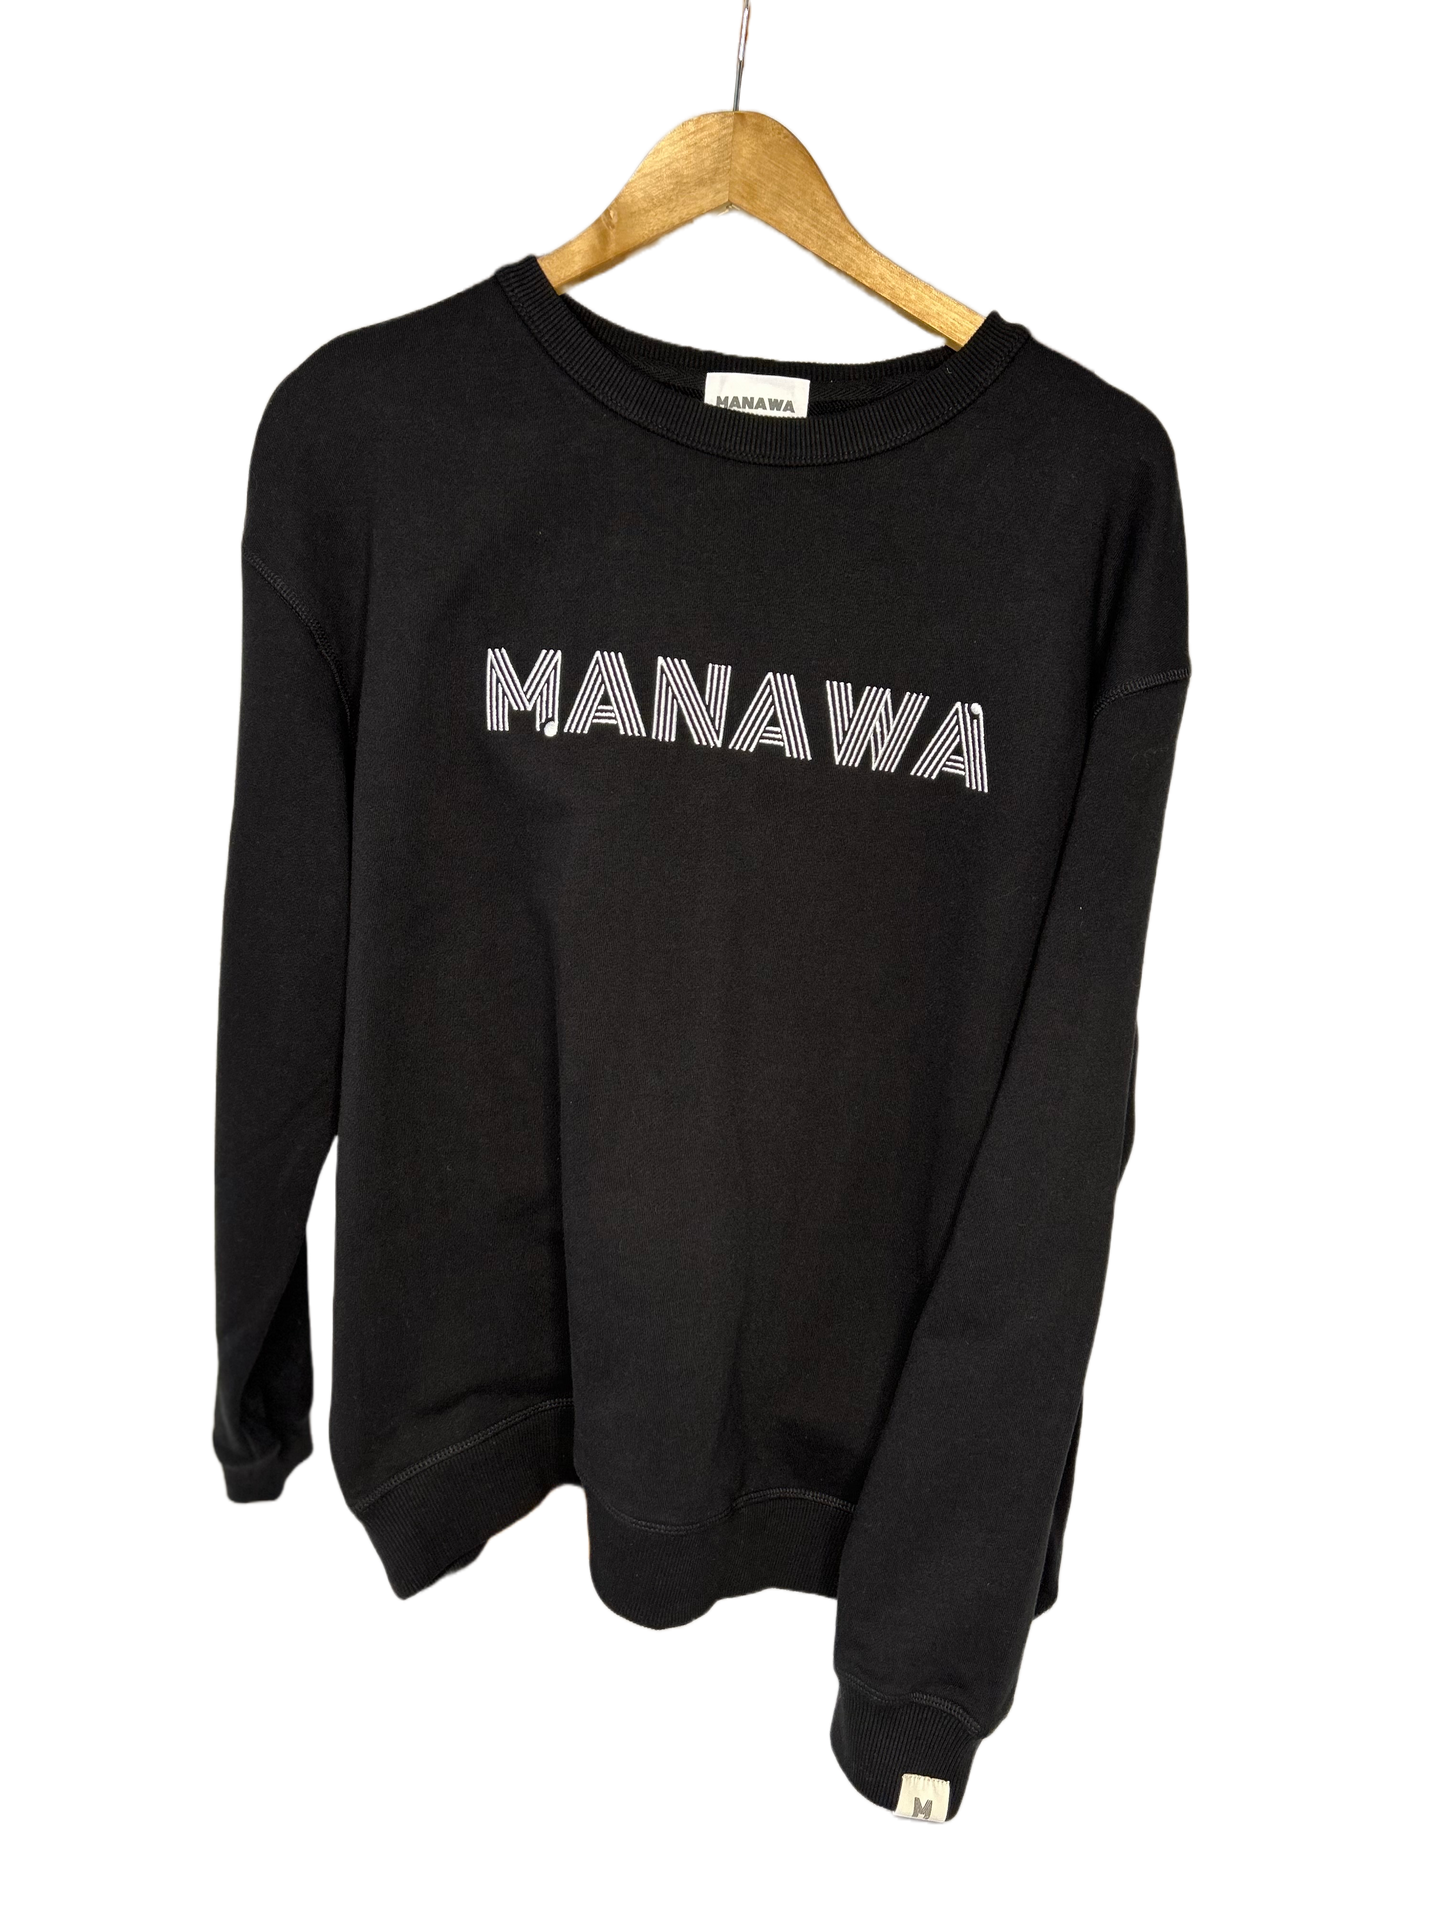 MANAWA crew - white embroidery